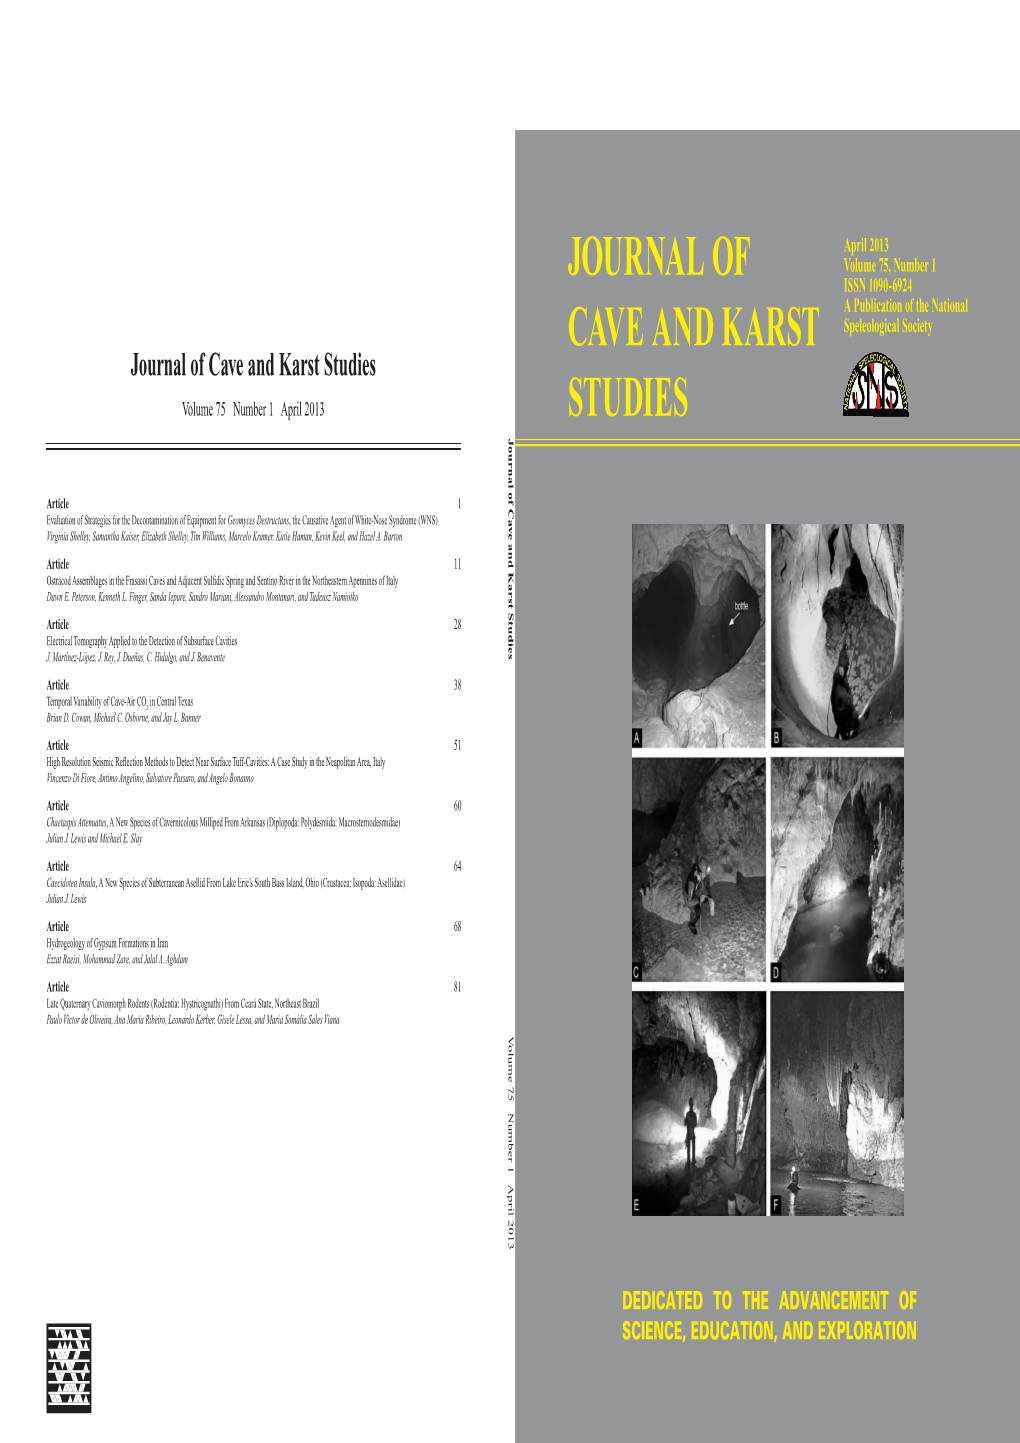 Journal of Cave and Karst Studies Volume 75 Number 1 April 2013 1 11 28 38 51 60 64 68 81